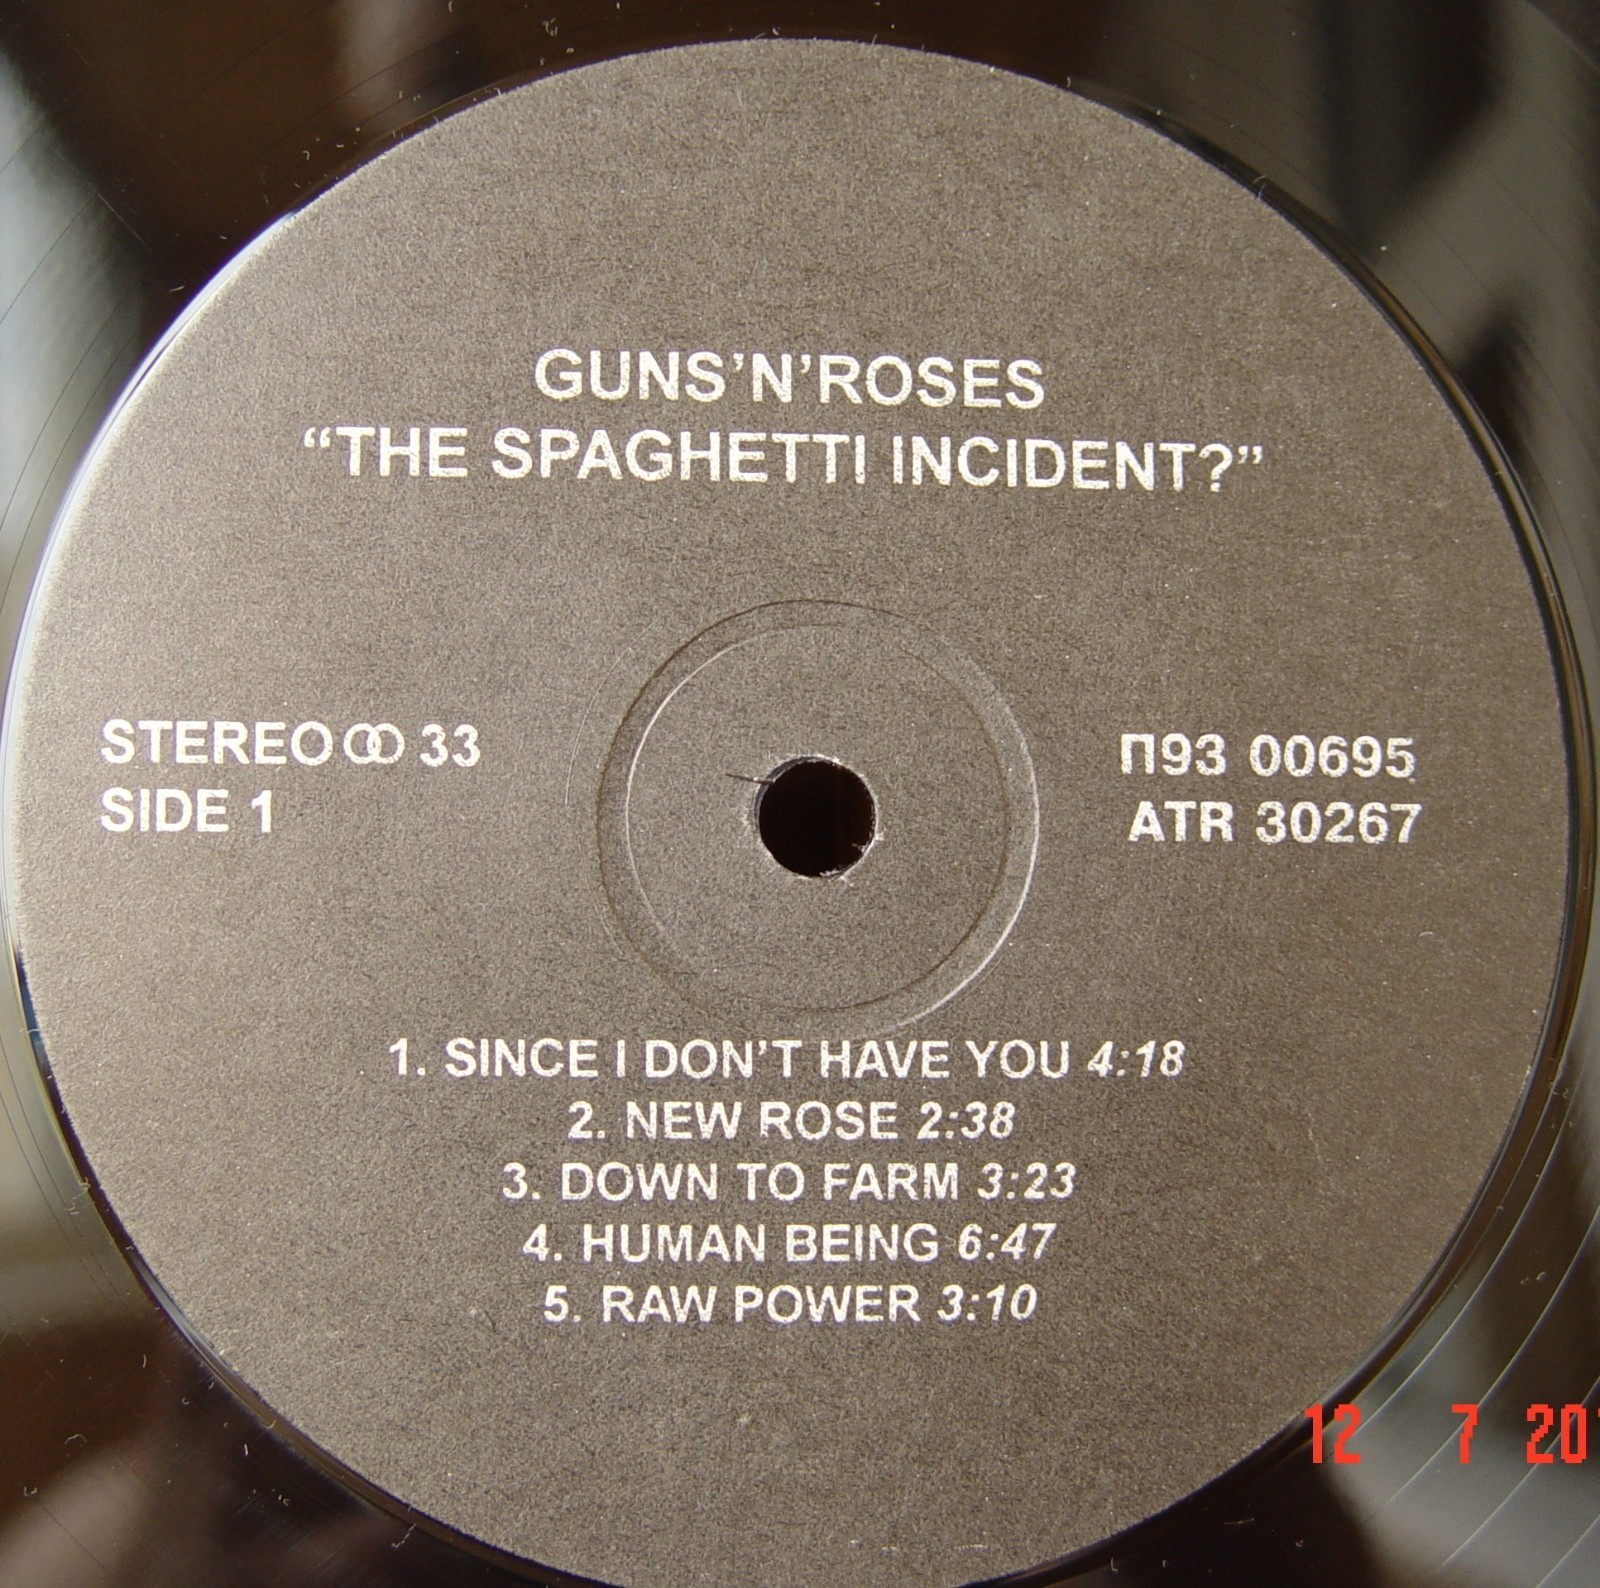 GUNS N' ROSES. The Spaghetti Incident?